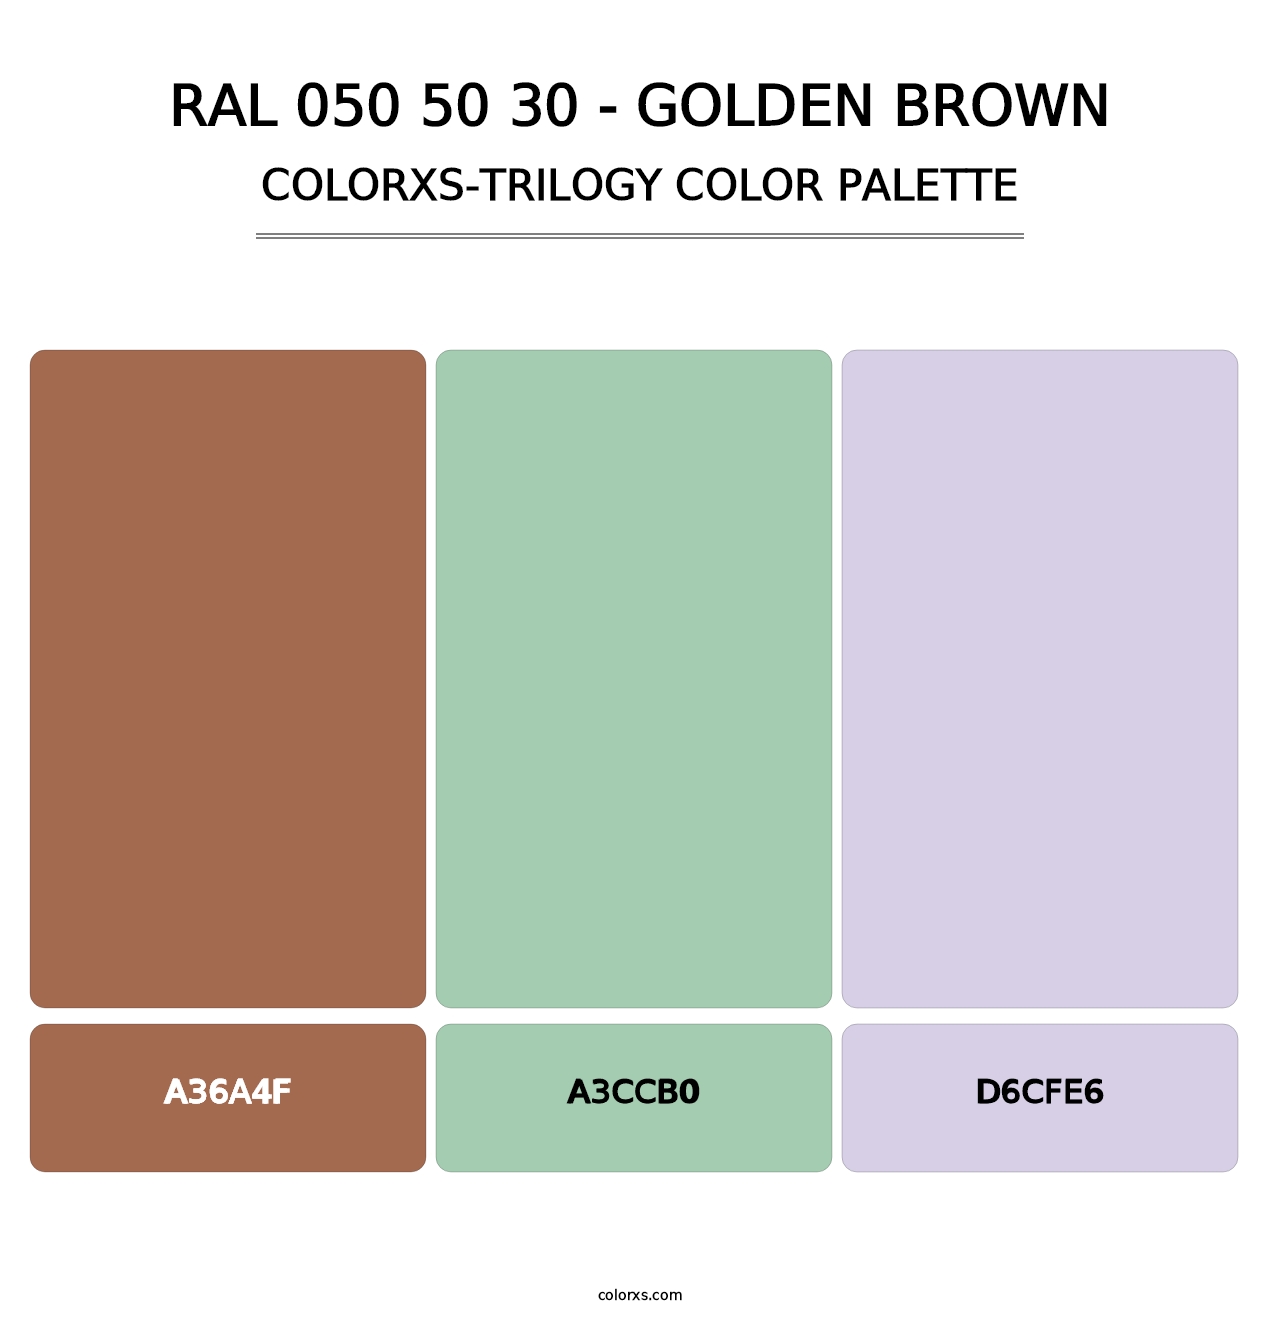 RAL 050 50 30 - Golden Brown - Colorxs Trilogy Palette